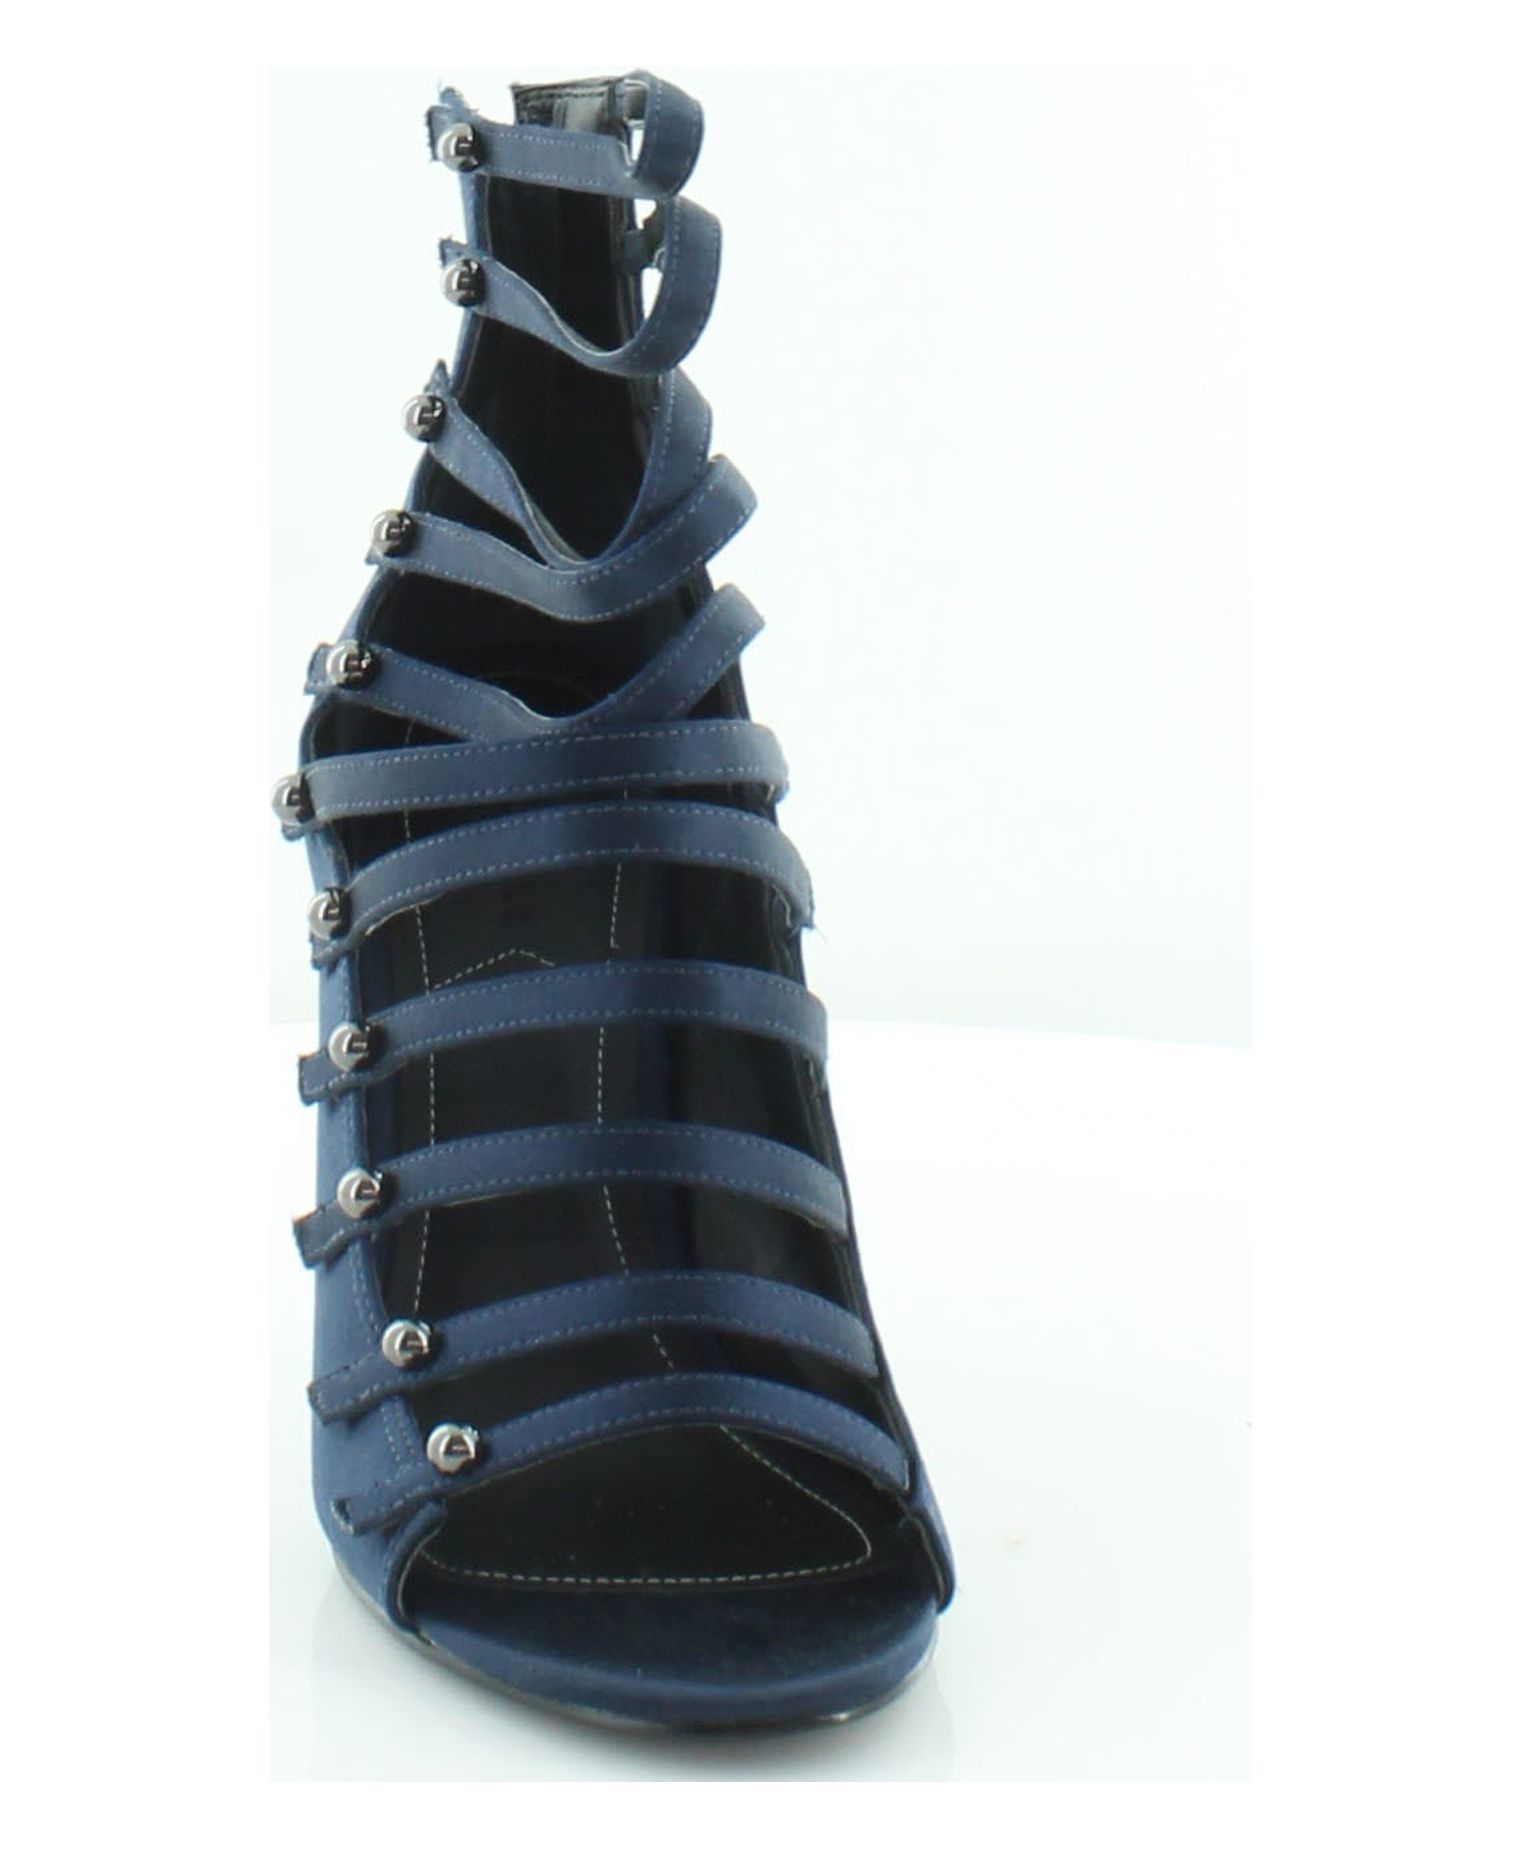 Kendall + Kylie Giaa Women's Heels Dark Blue Size 8.5 M - image 4 of 5